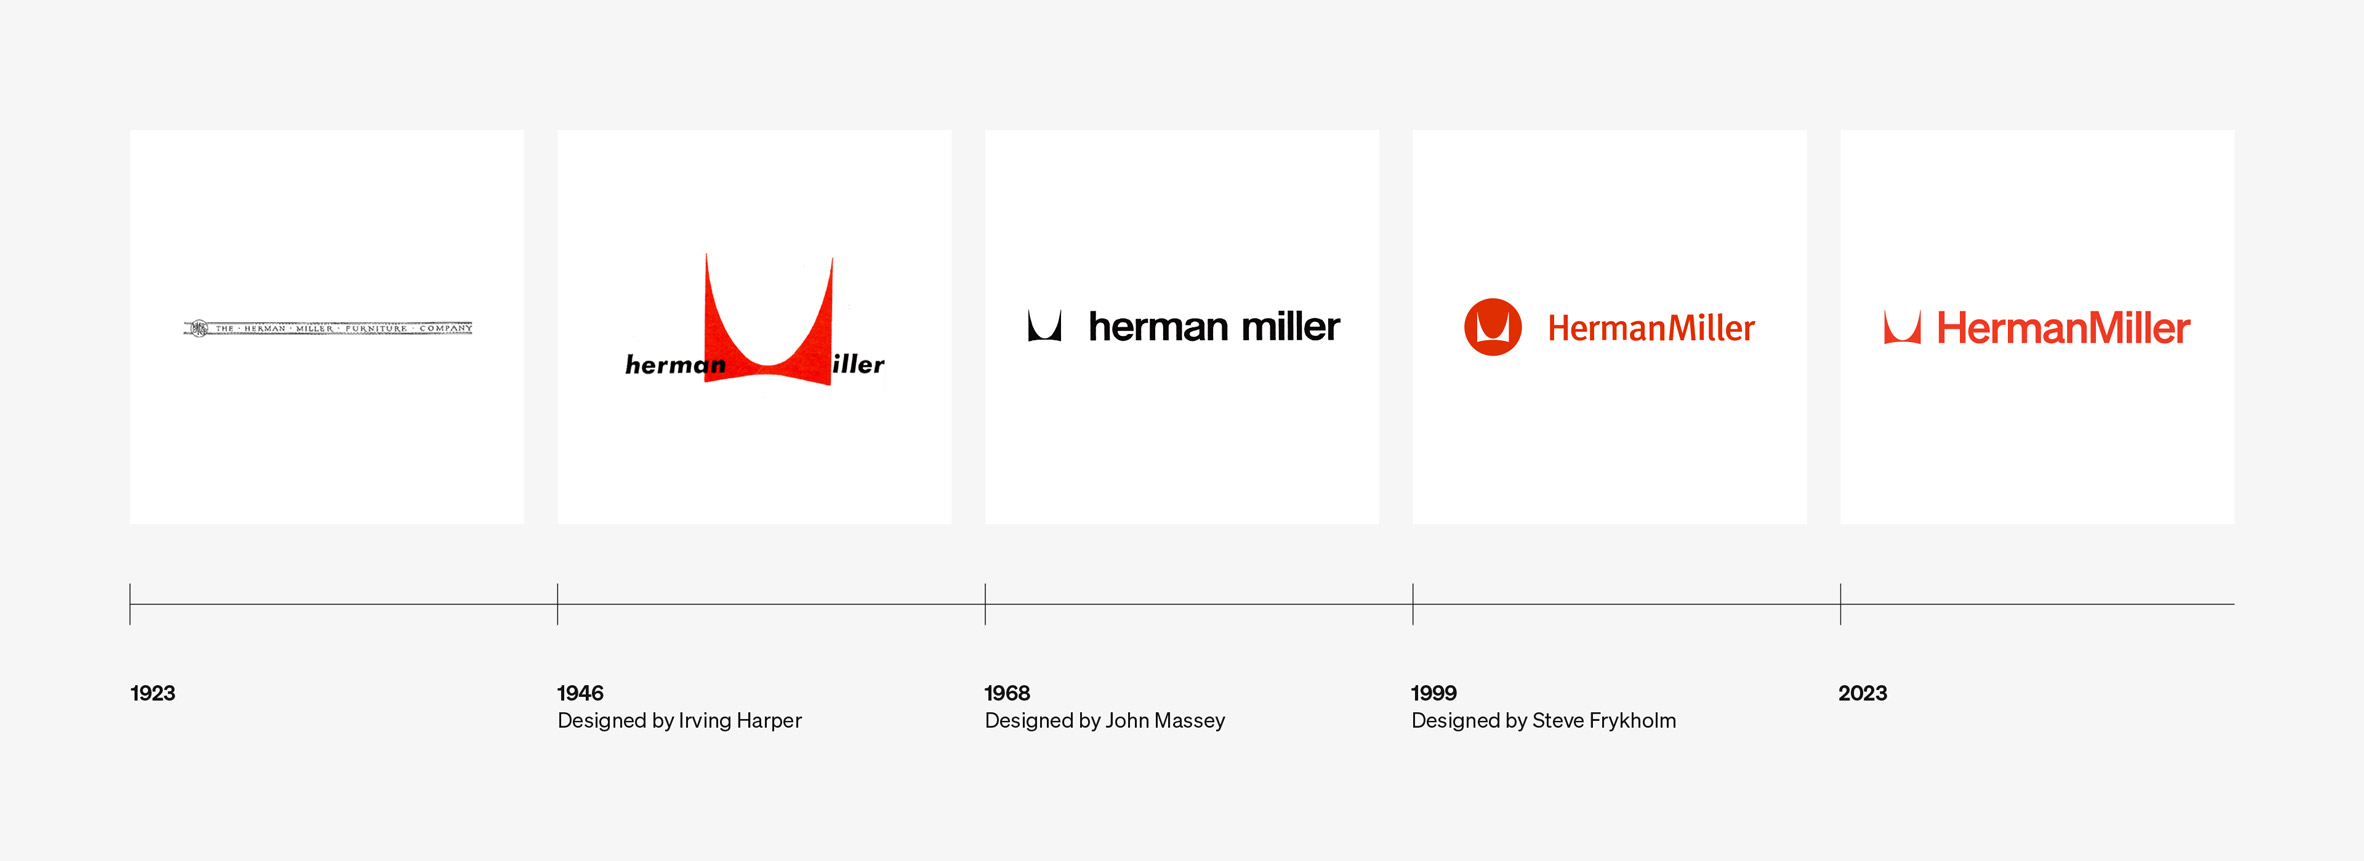 Evolution of Herman Miller logo from 1923 to 2023